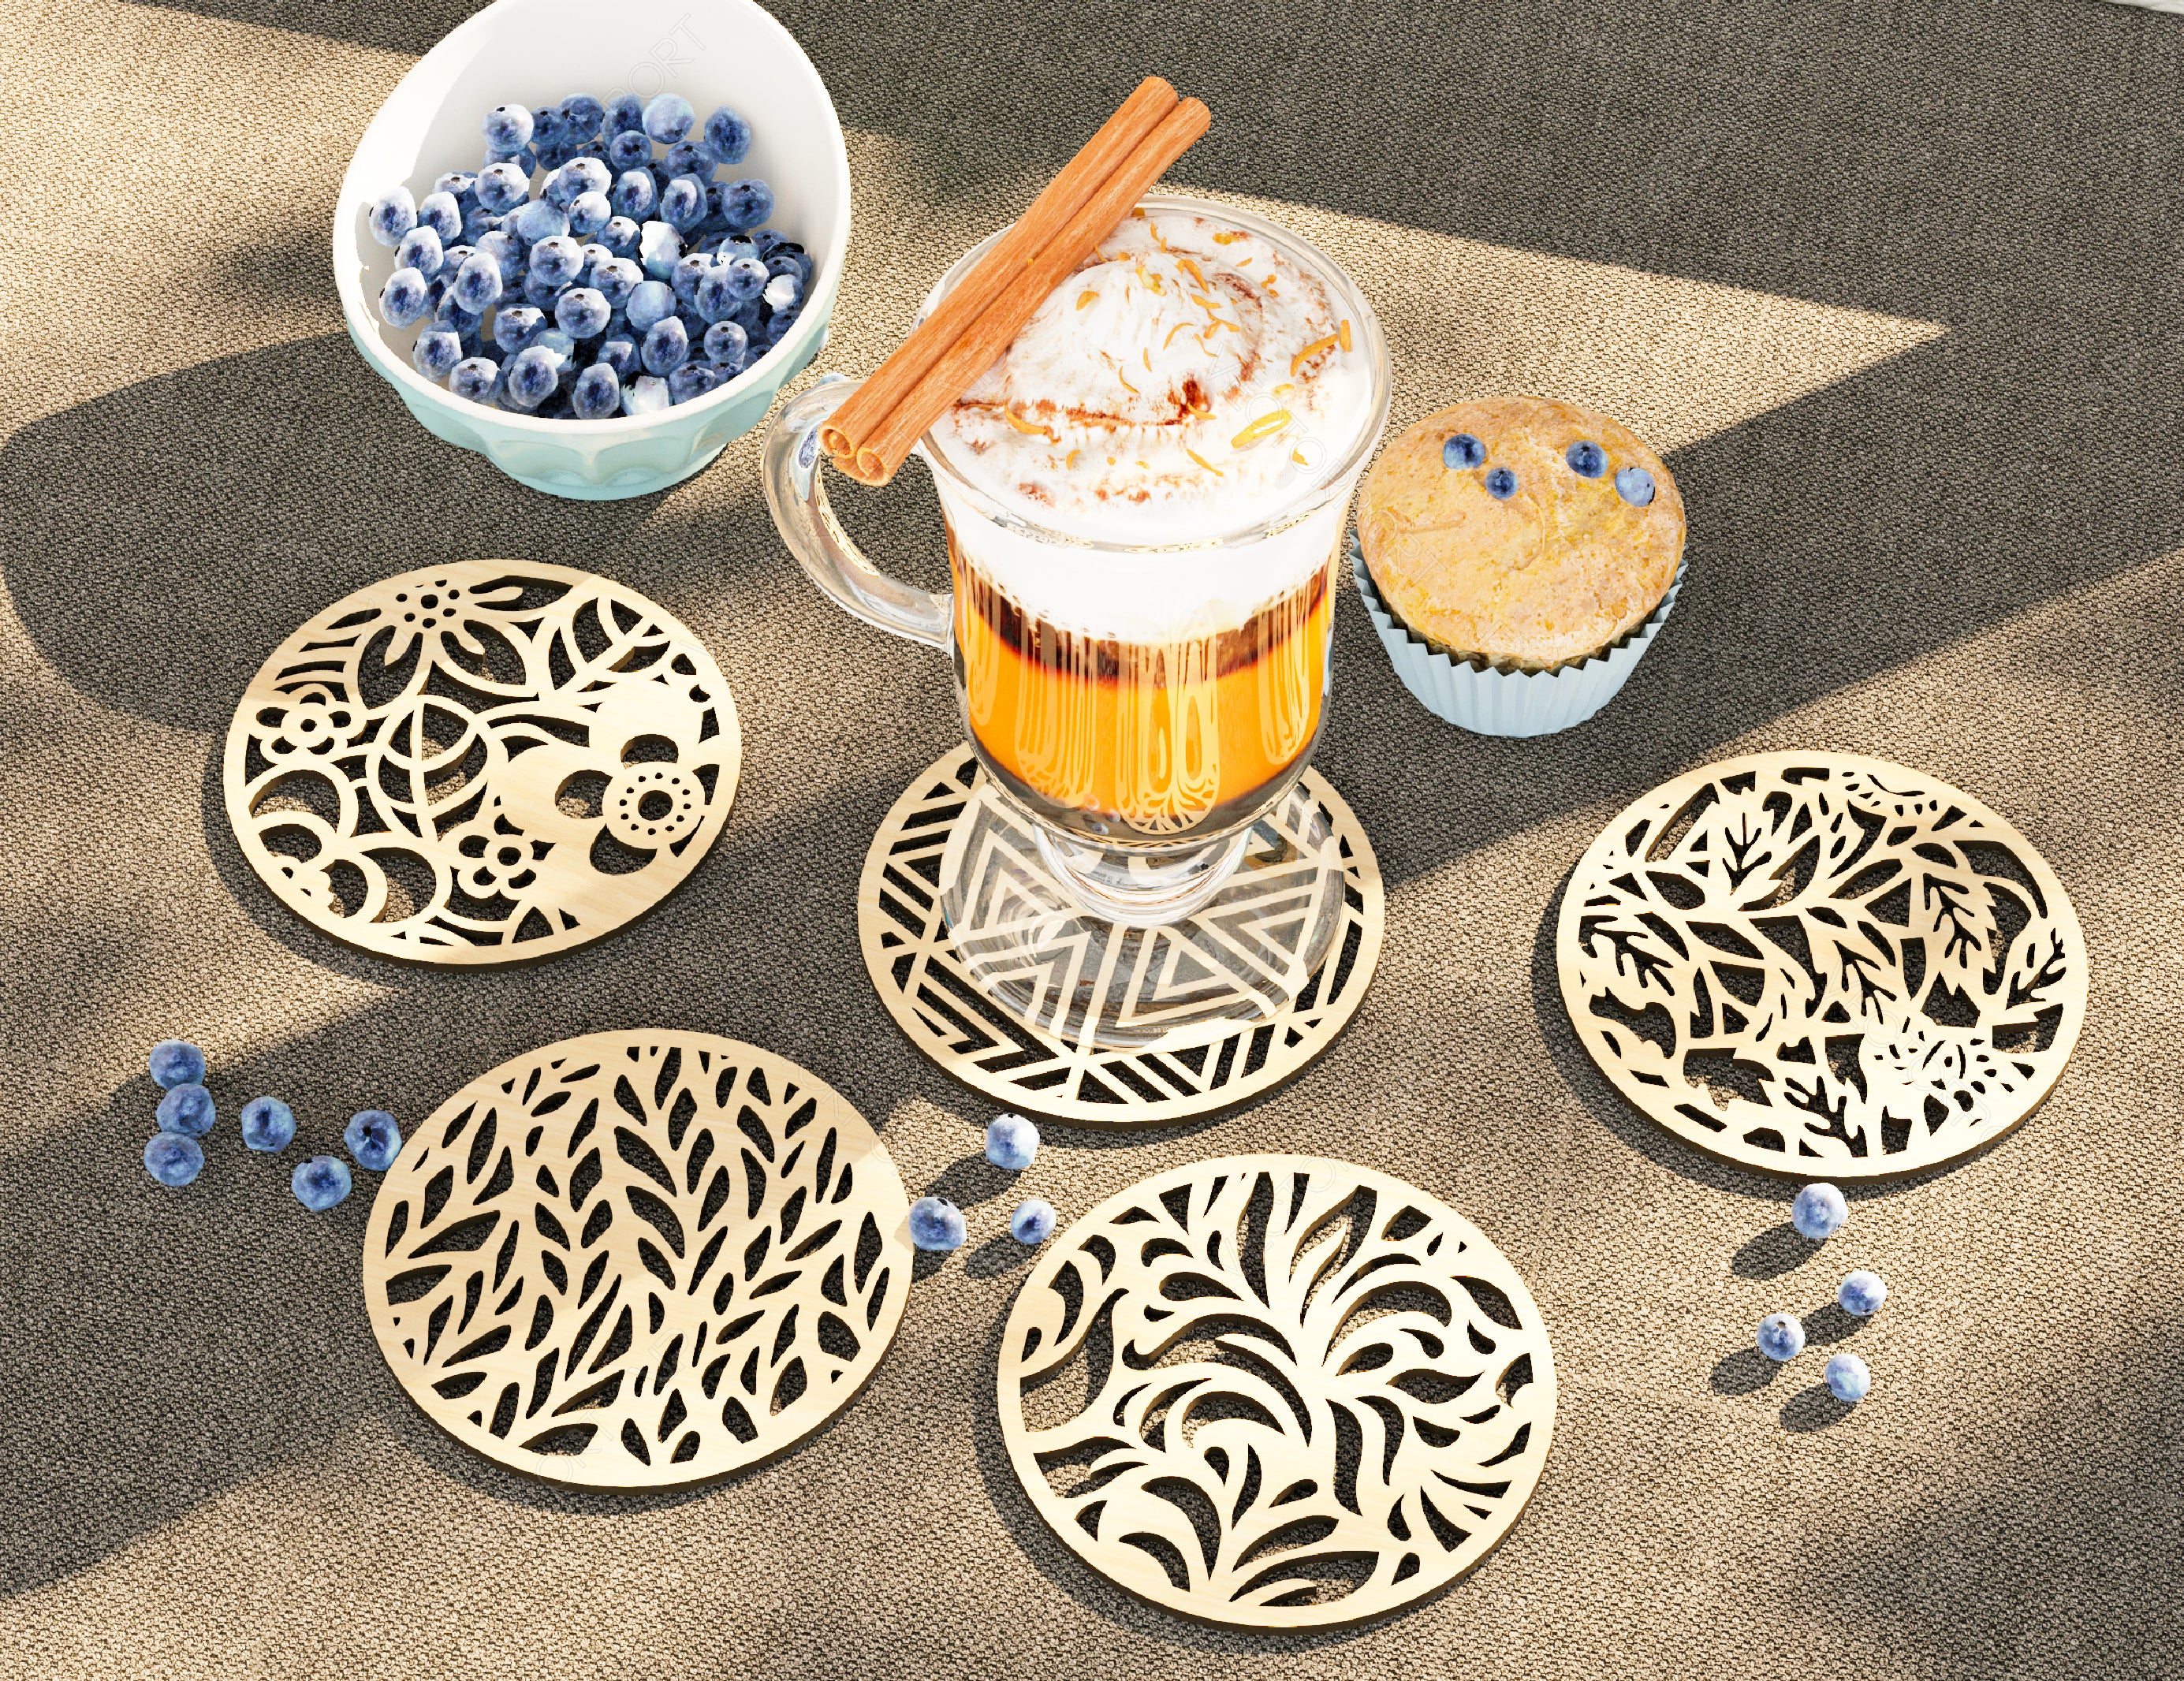 Elegant Round Laser Cut Wood Coasters Drink Tea Coffee Cup Mat Pad Placemat Tableware Digital Download | SVG, DXF |#177|